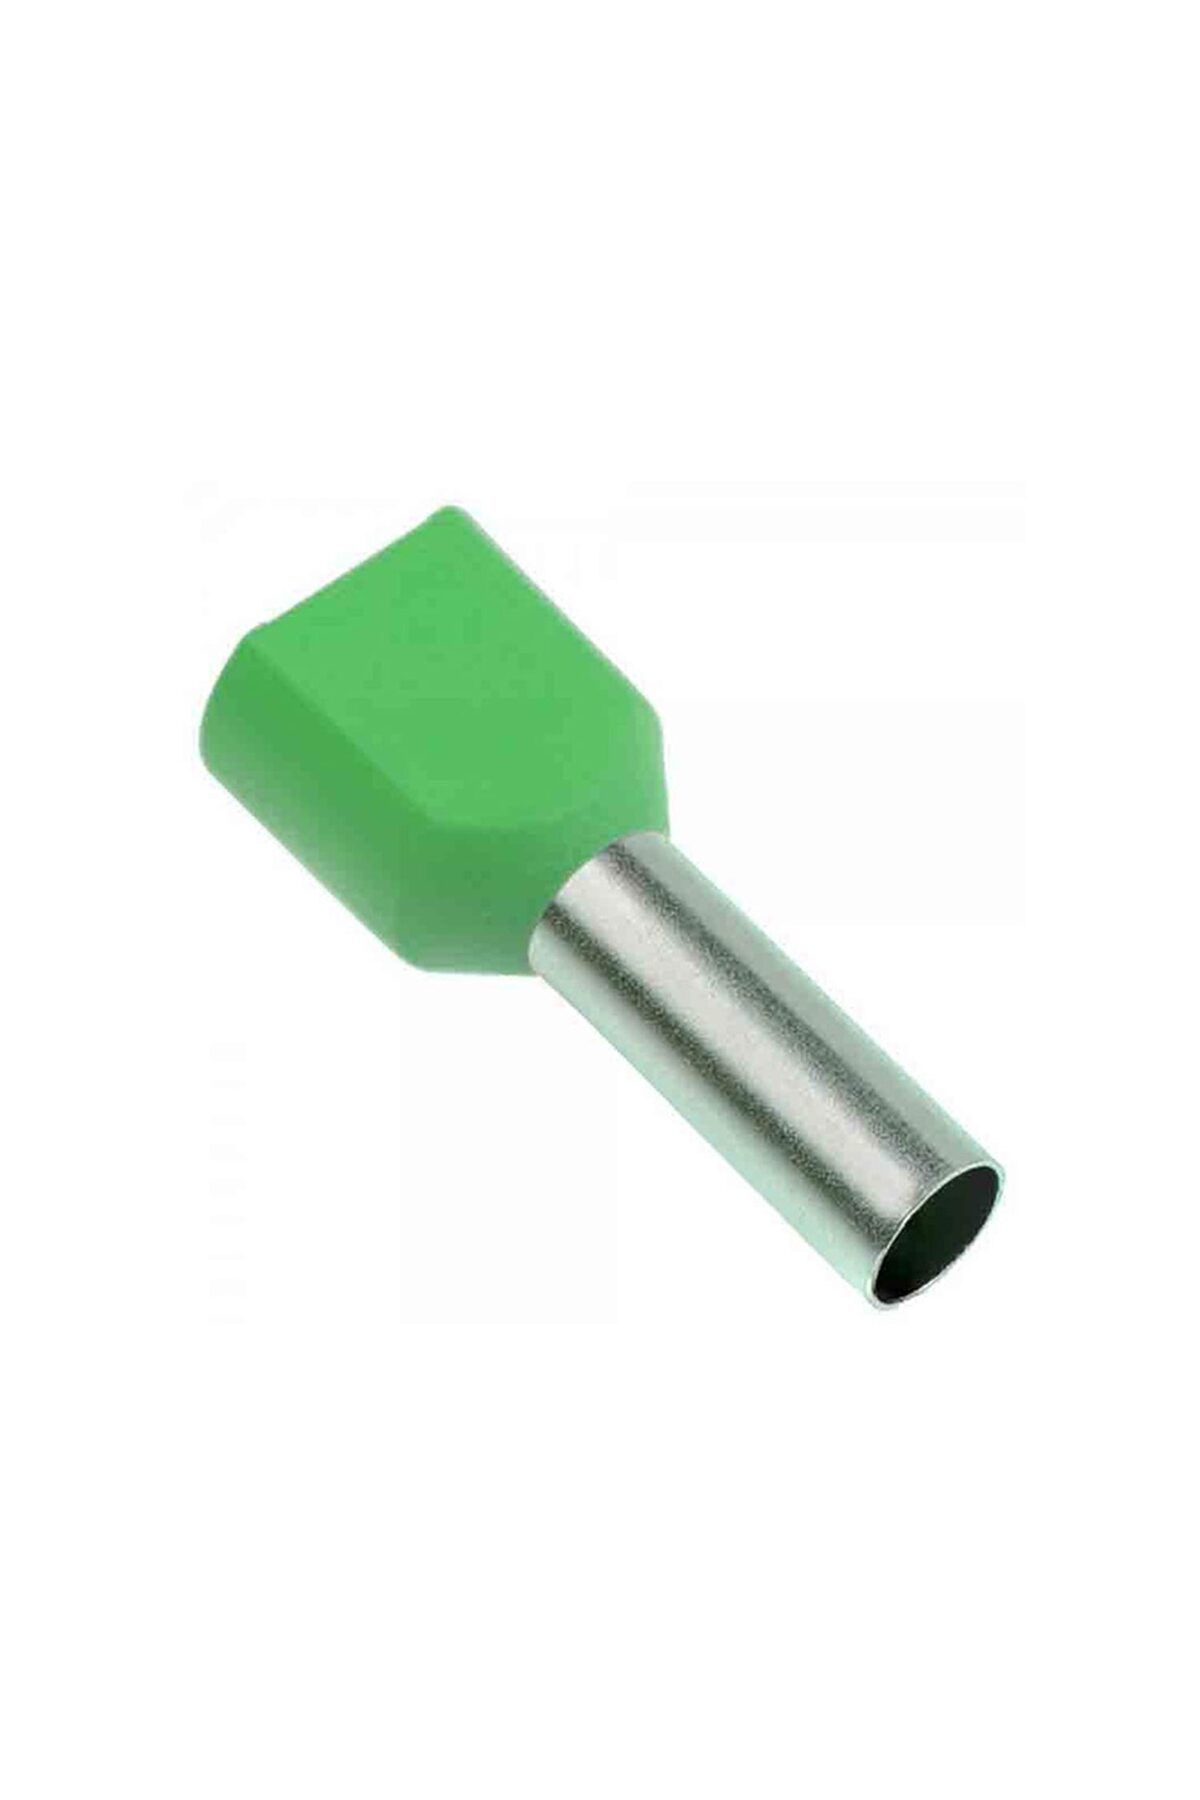 Genel Markalar İzoleli Kablo Yüksüğü 6mm Yeşil Jameson Jcy-6f